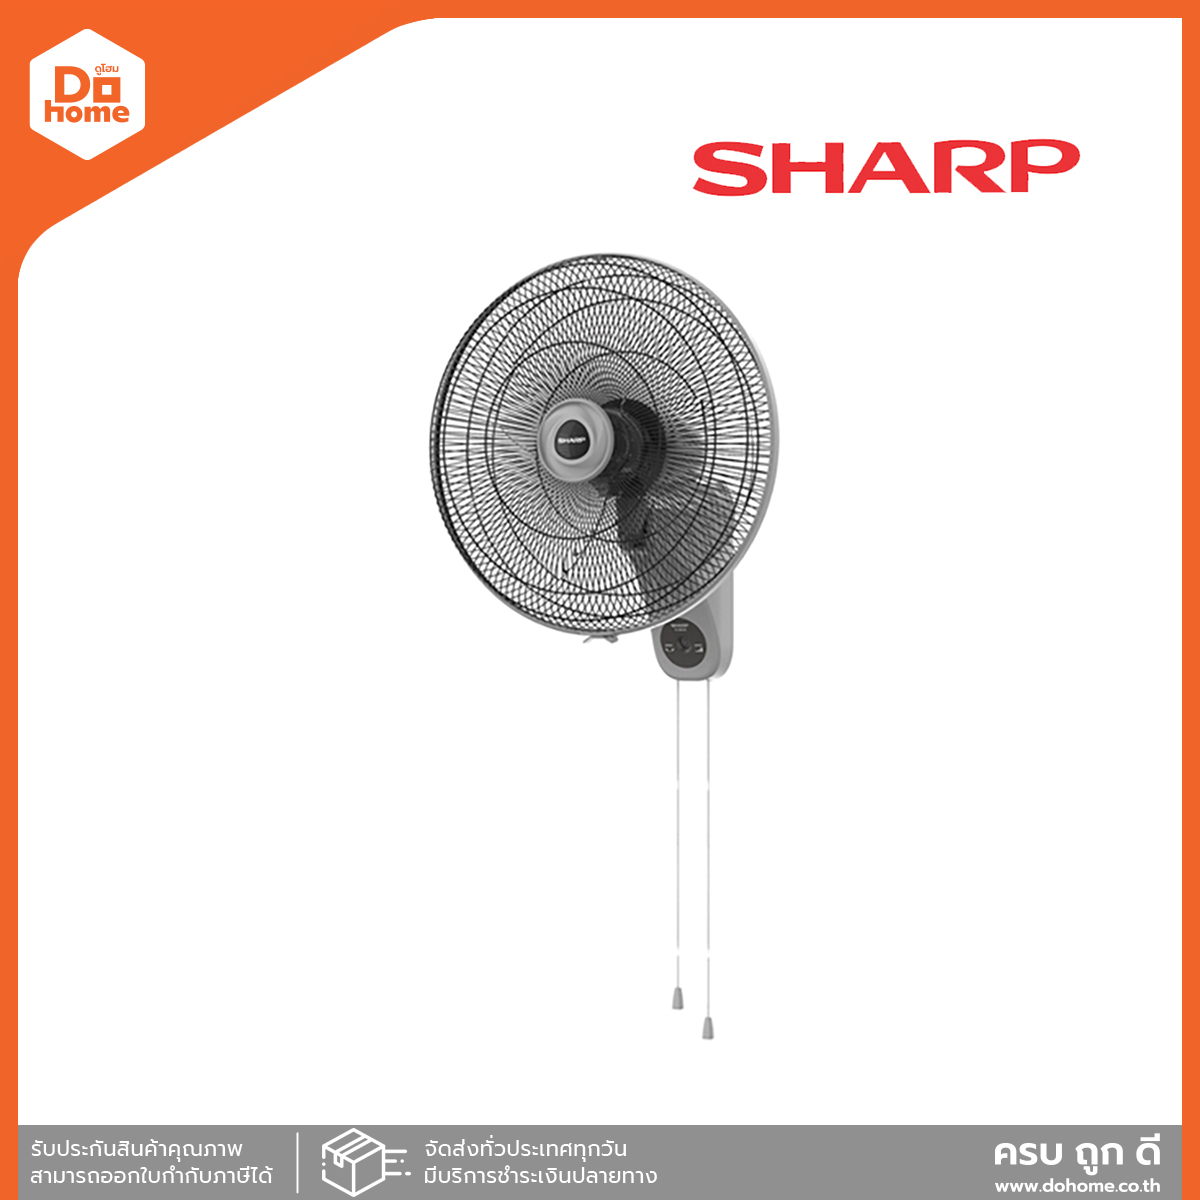 SHARP พัดลมติดผนัง ขนาด 18 นิ้ว รุ่น PJ-WA181CG สีเทา |MC|